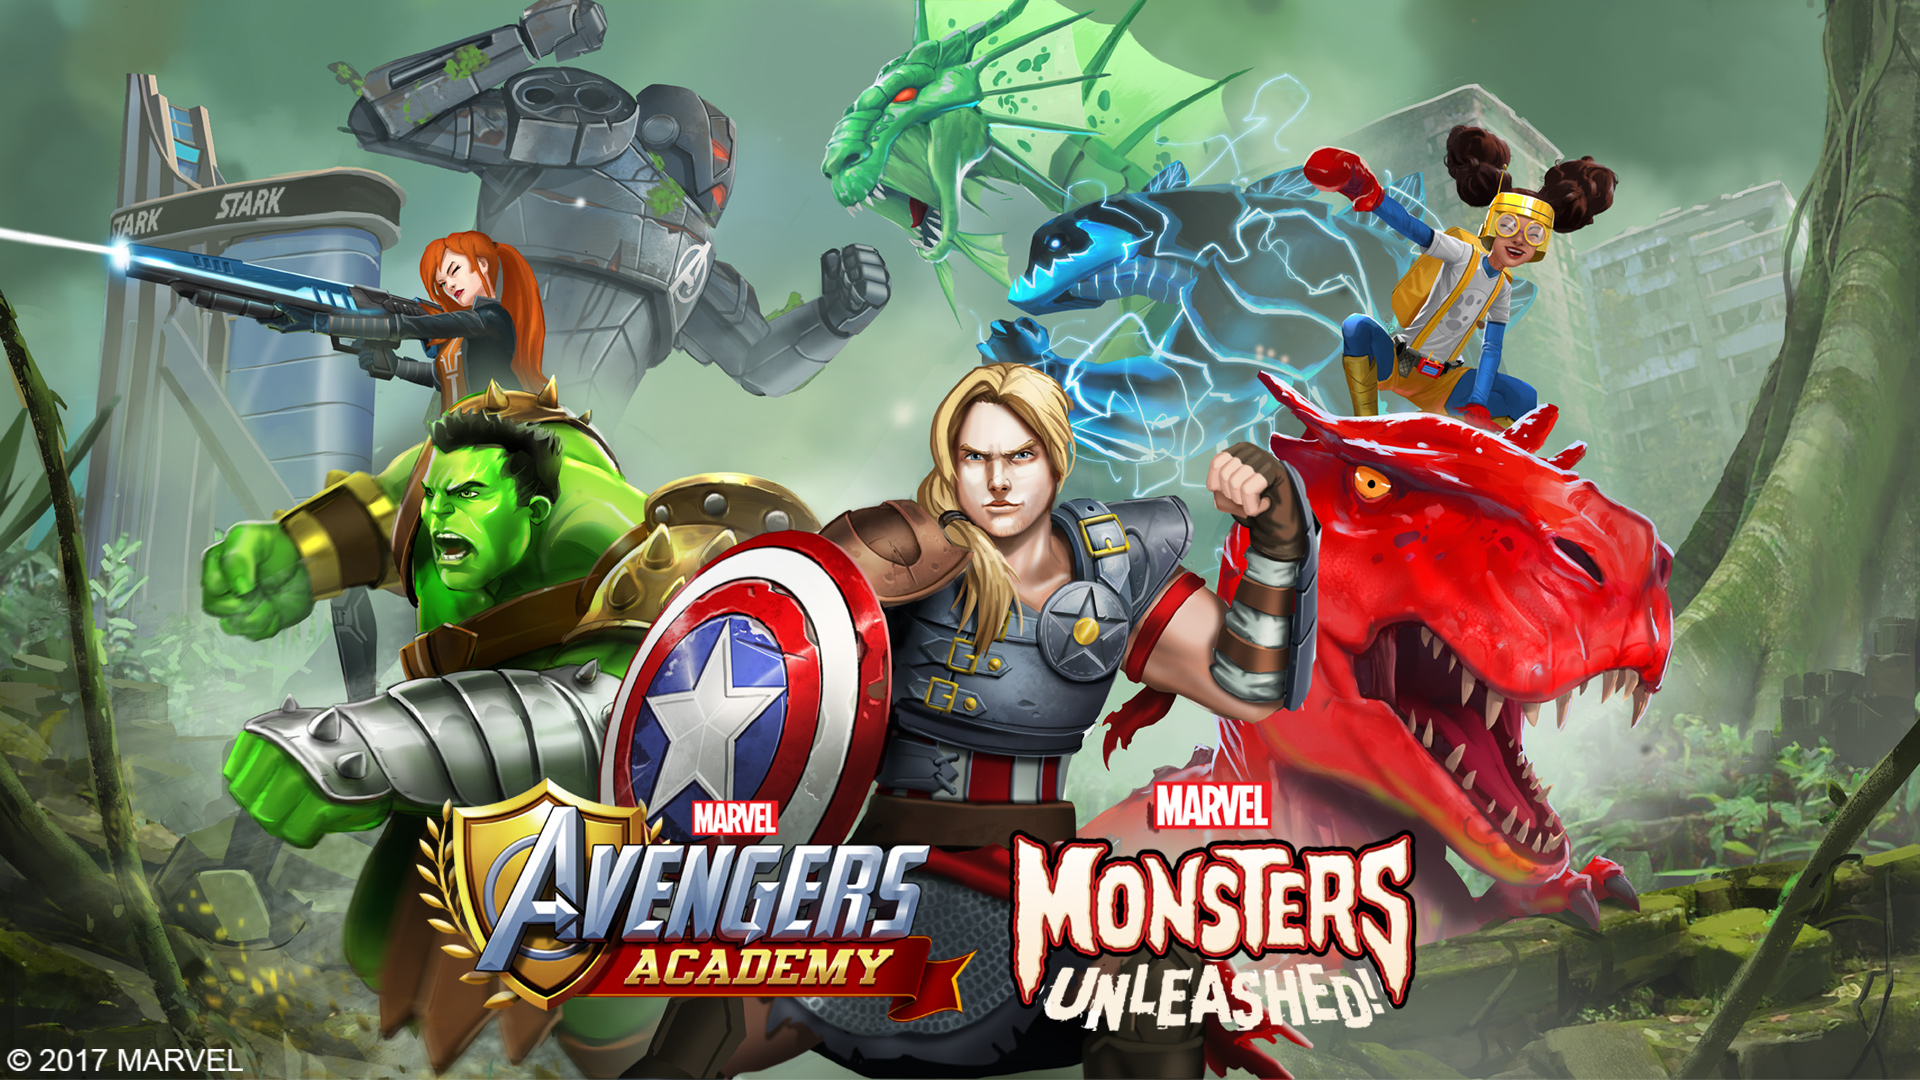 Monsters Unleashed Event | Avengers Academy Wikia | FANDOM powered by Wikia